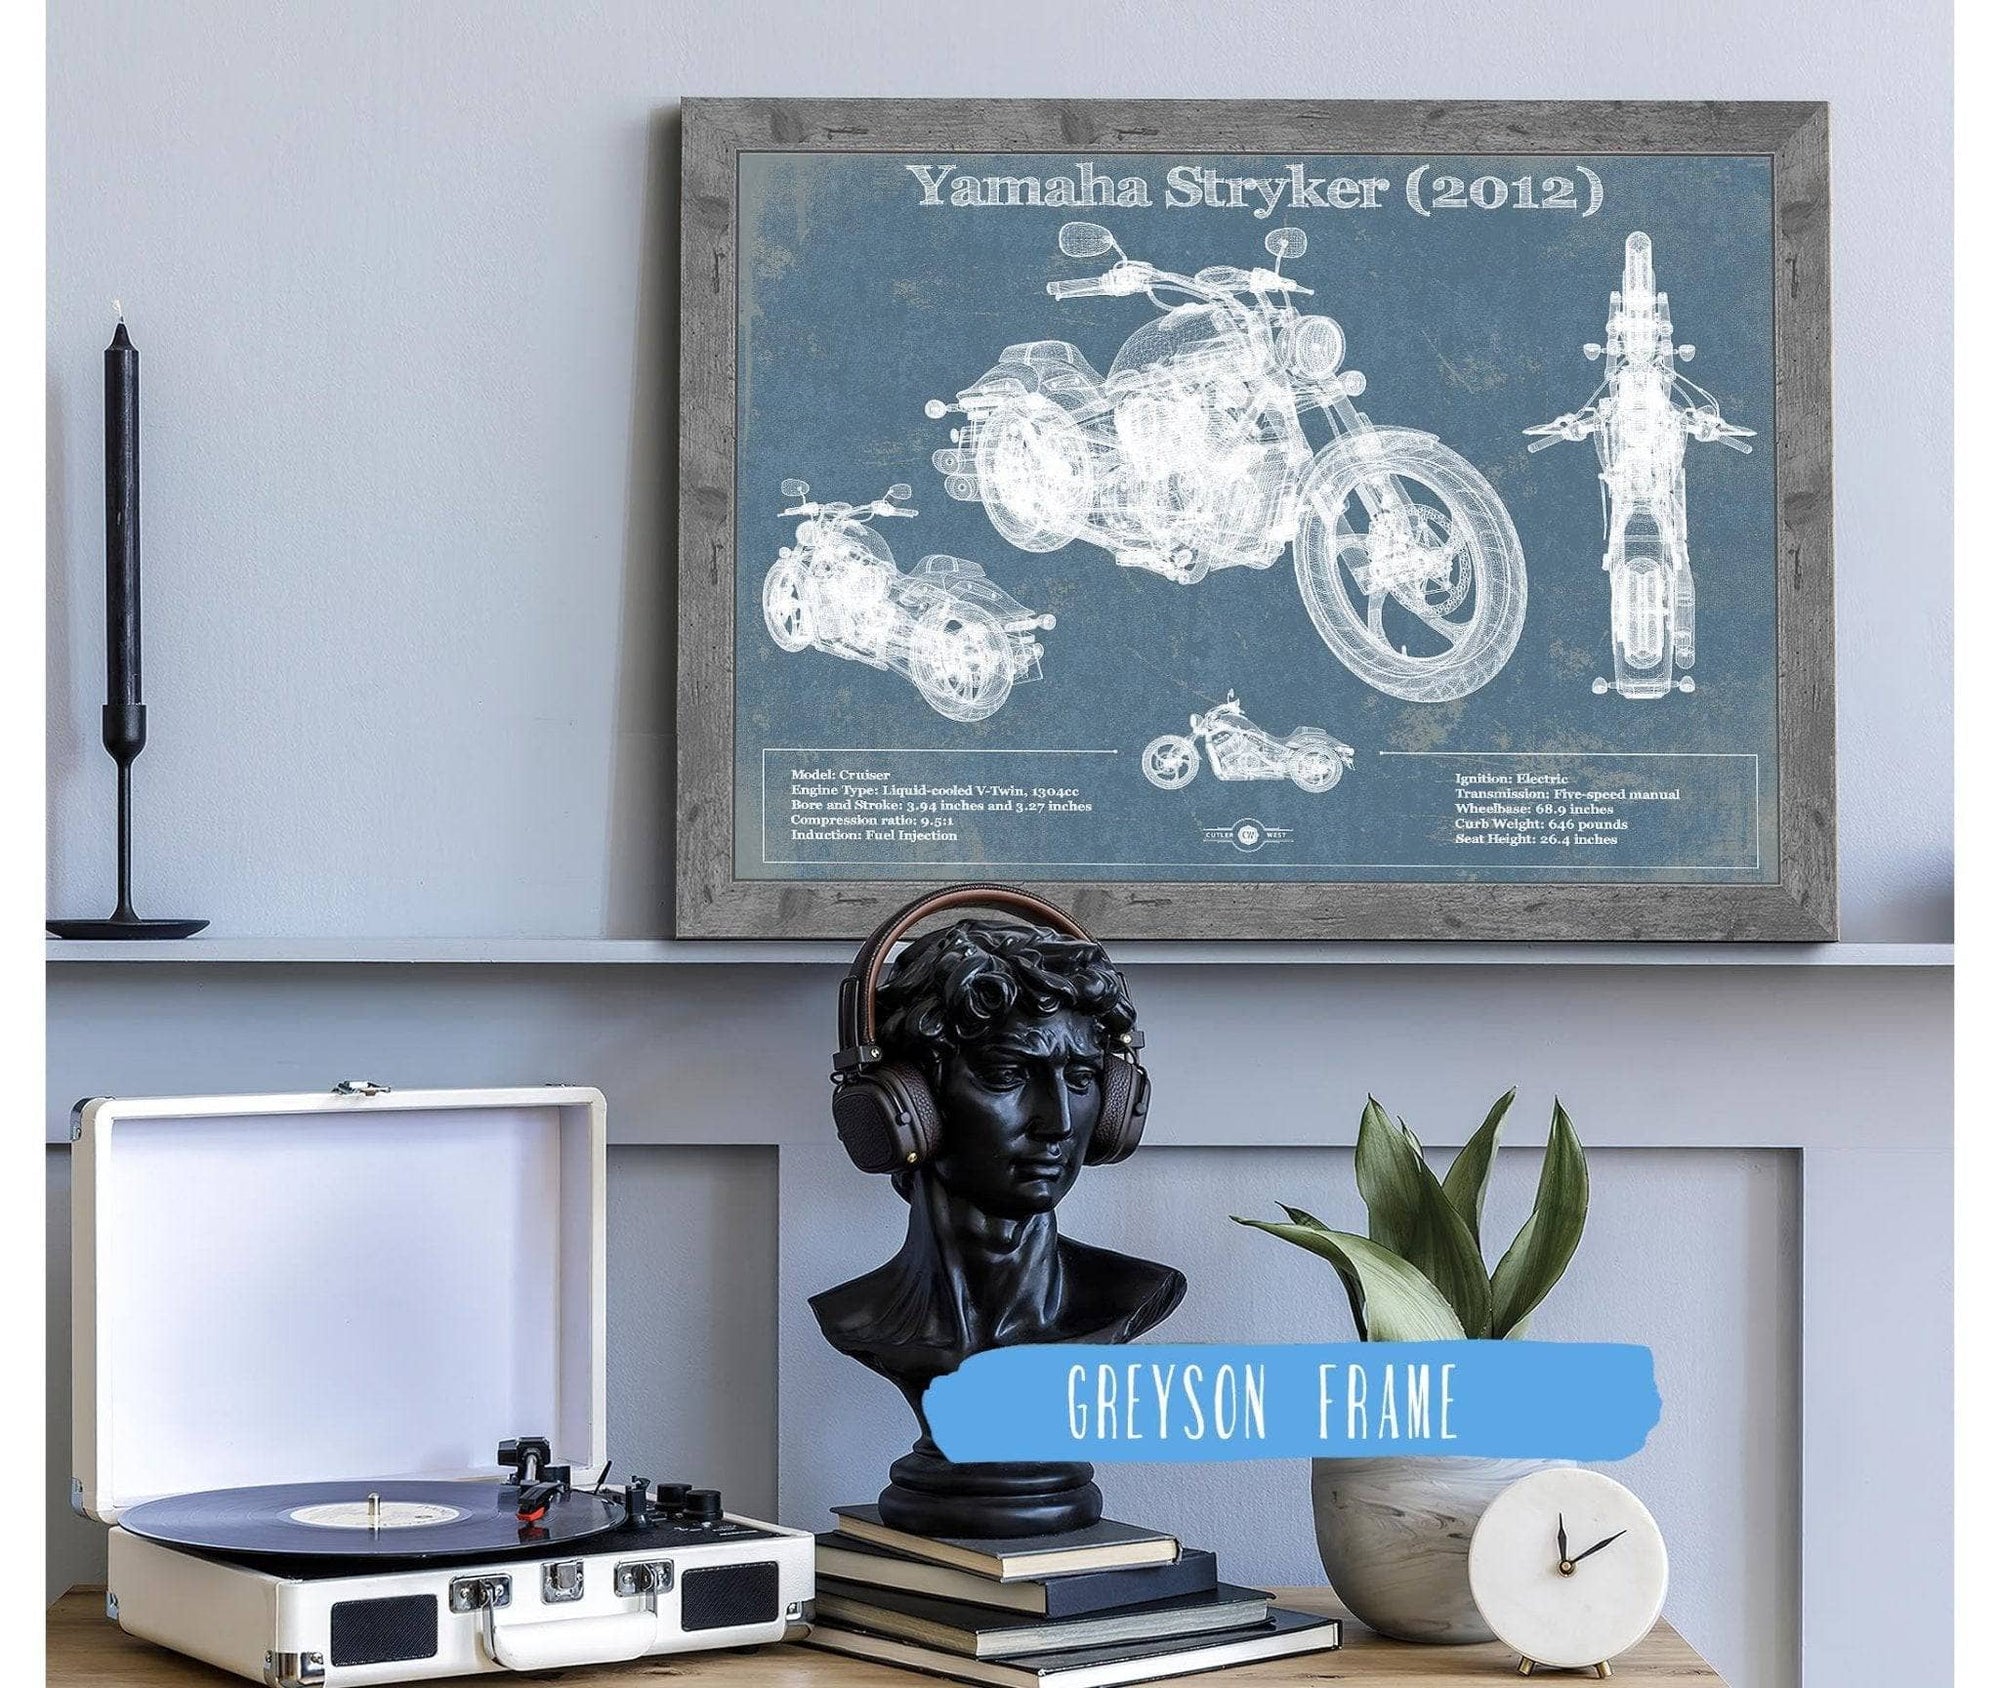 Cutler West 14" x 11" / Greyson Frame Yamaha Stryker (2012) Vintage Blueprint Motorcycle Patent Print 833110033-14"-x-11"6206